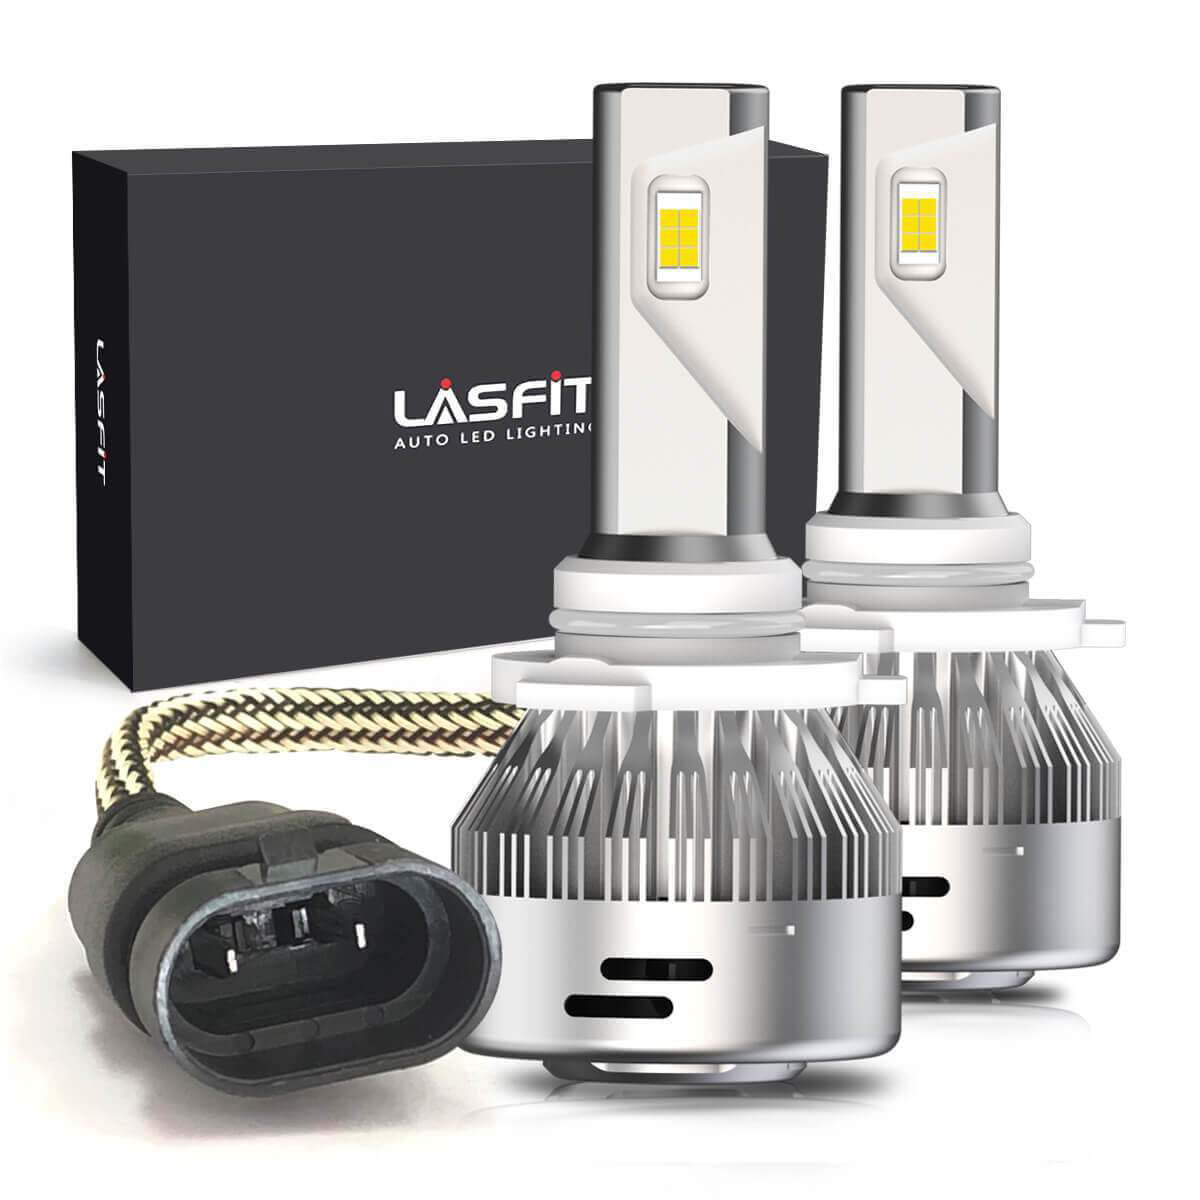 LASFIT 9005/HB3 9006/HB4 LED Bulbs Combo Upgrade Mini Design Halogen Replacement LC Plus 6000K Cool White